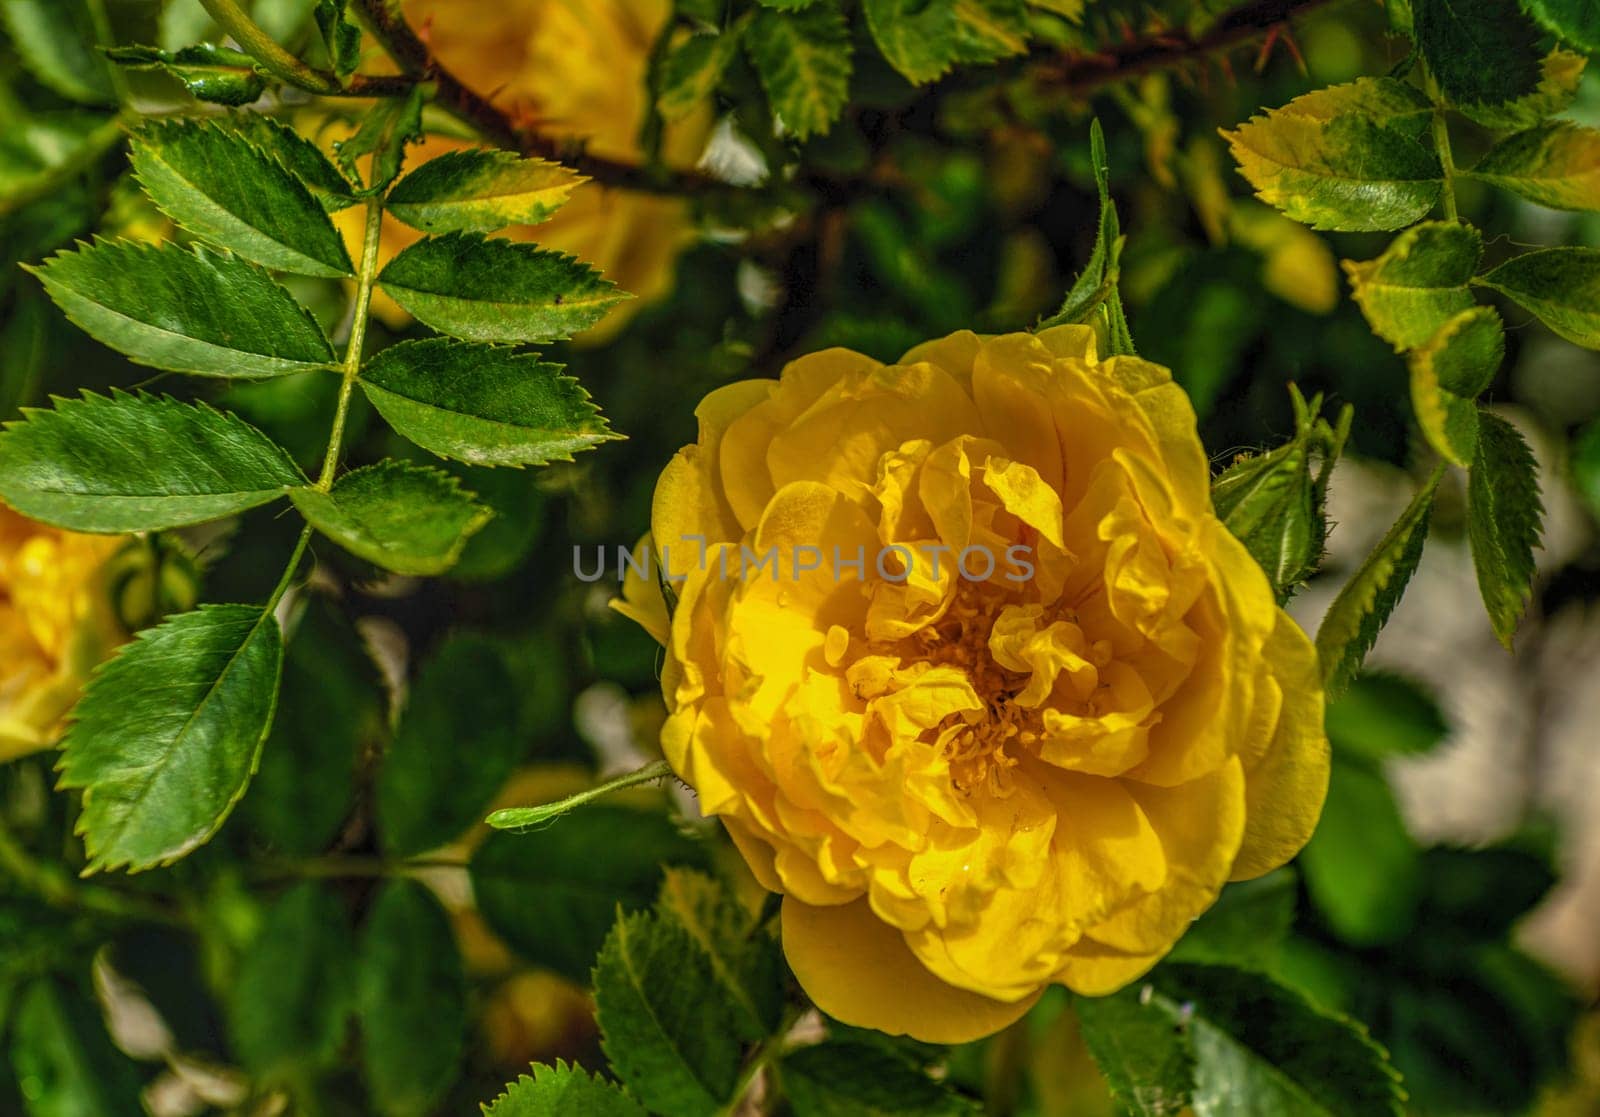 Golden celebration rose flowers on green leaves background by Multipedia